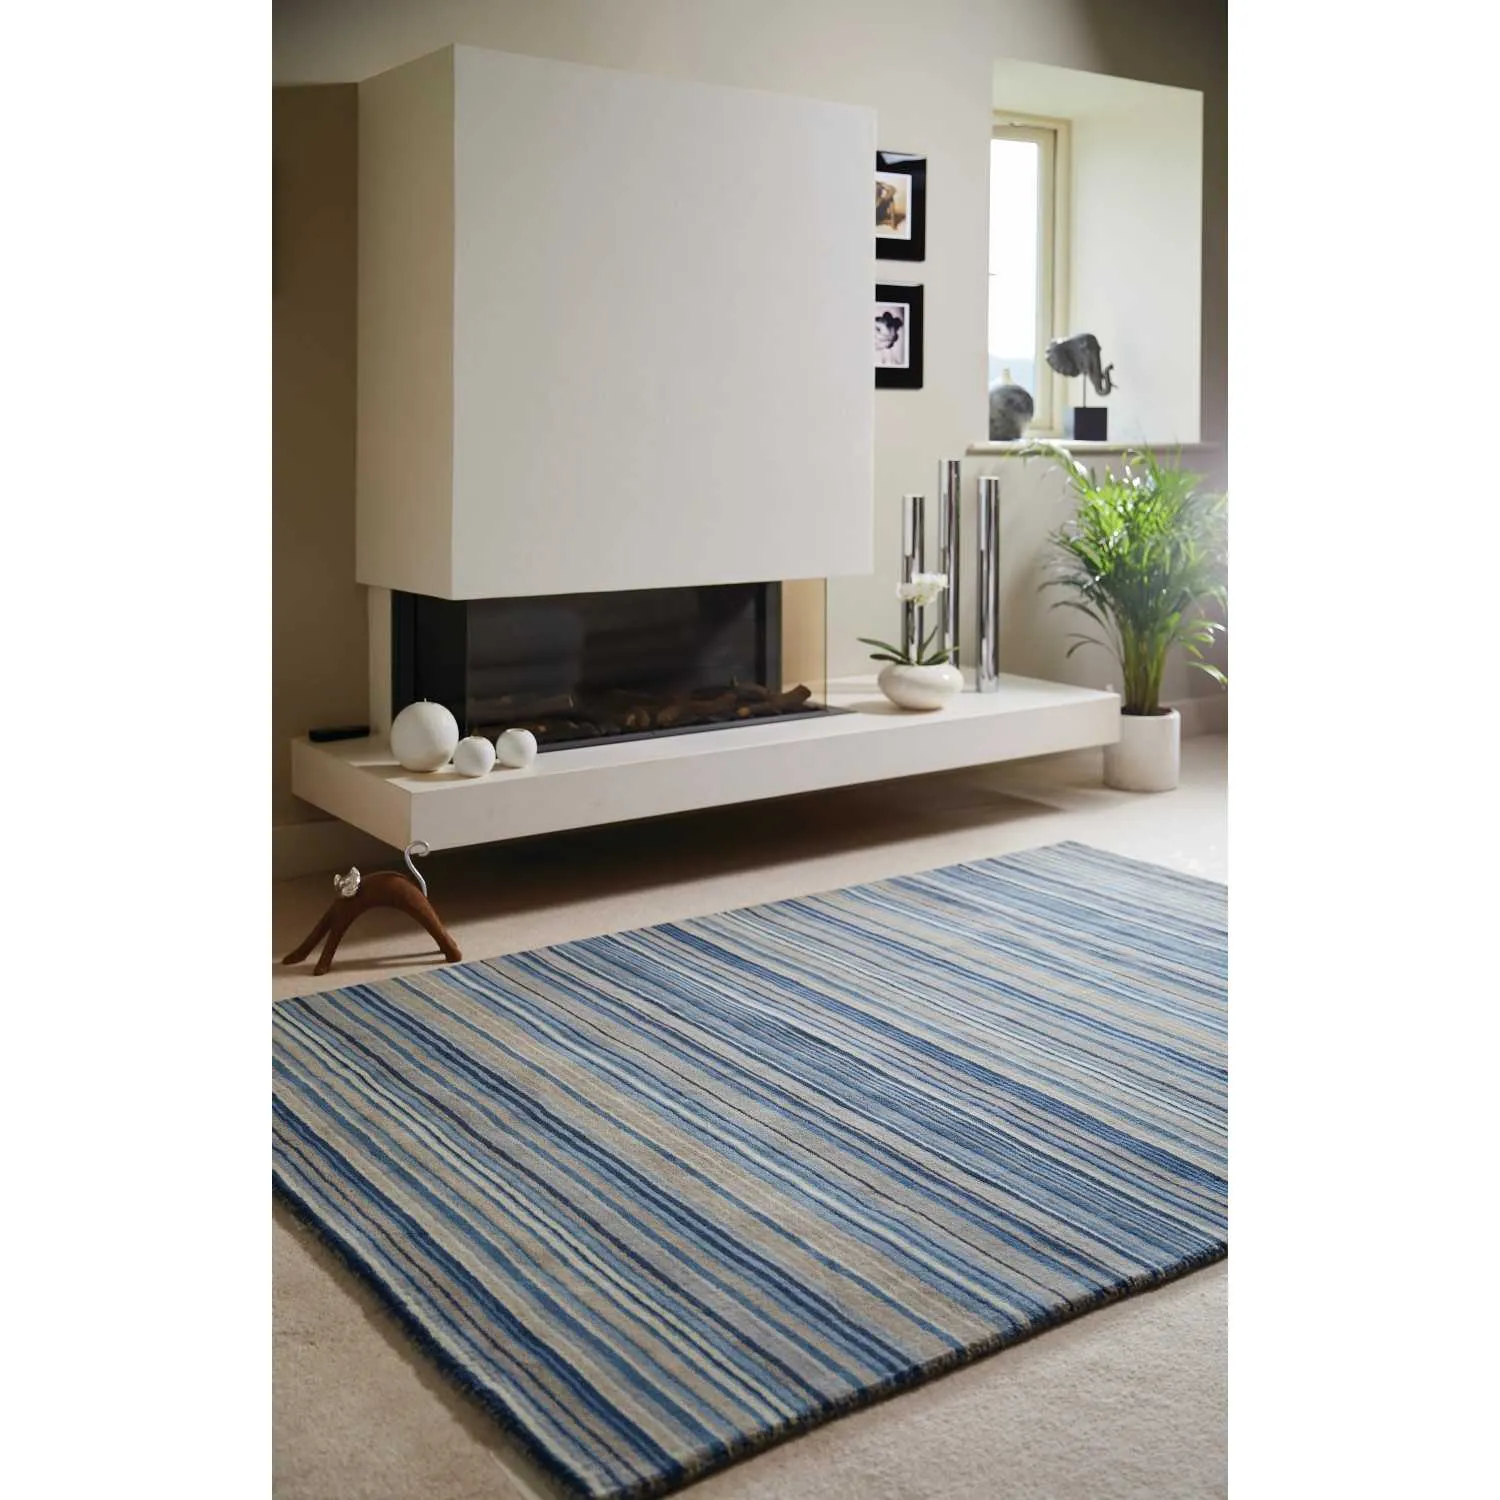 Origins Fine Handloom Woven Fine Stripes Pure Wool Rug in Blue and Beige 160x230cm